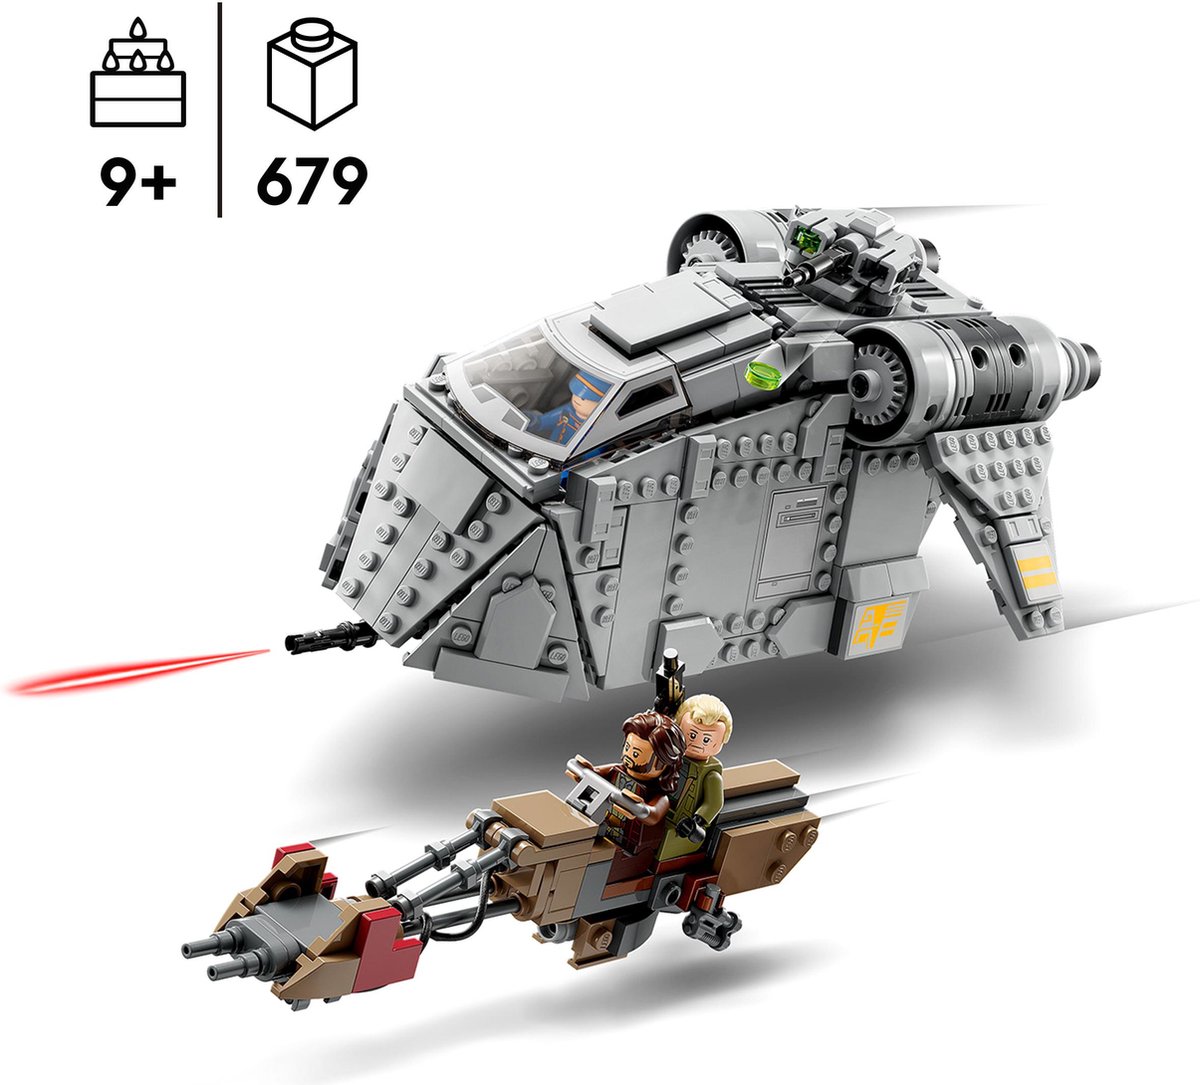 LEGO Star Wars 75338 Hinderlaag op Ferrix Bouwset